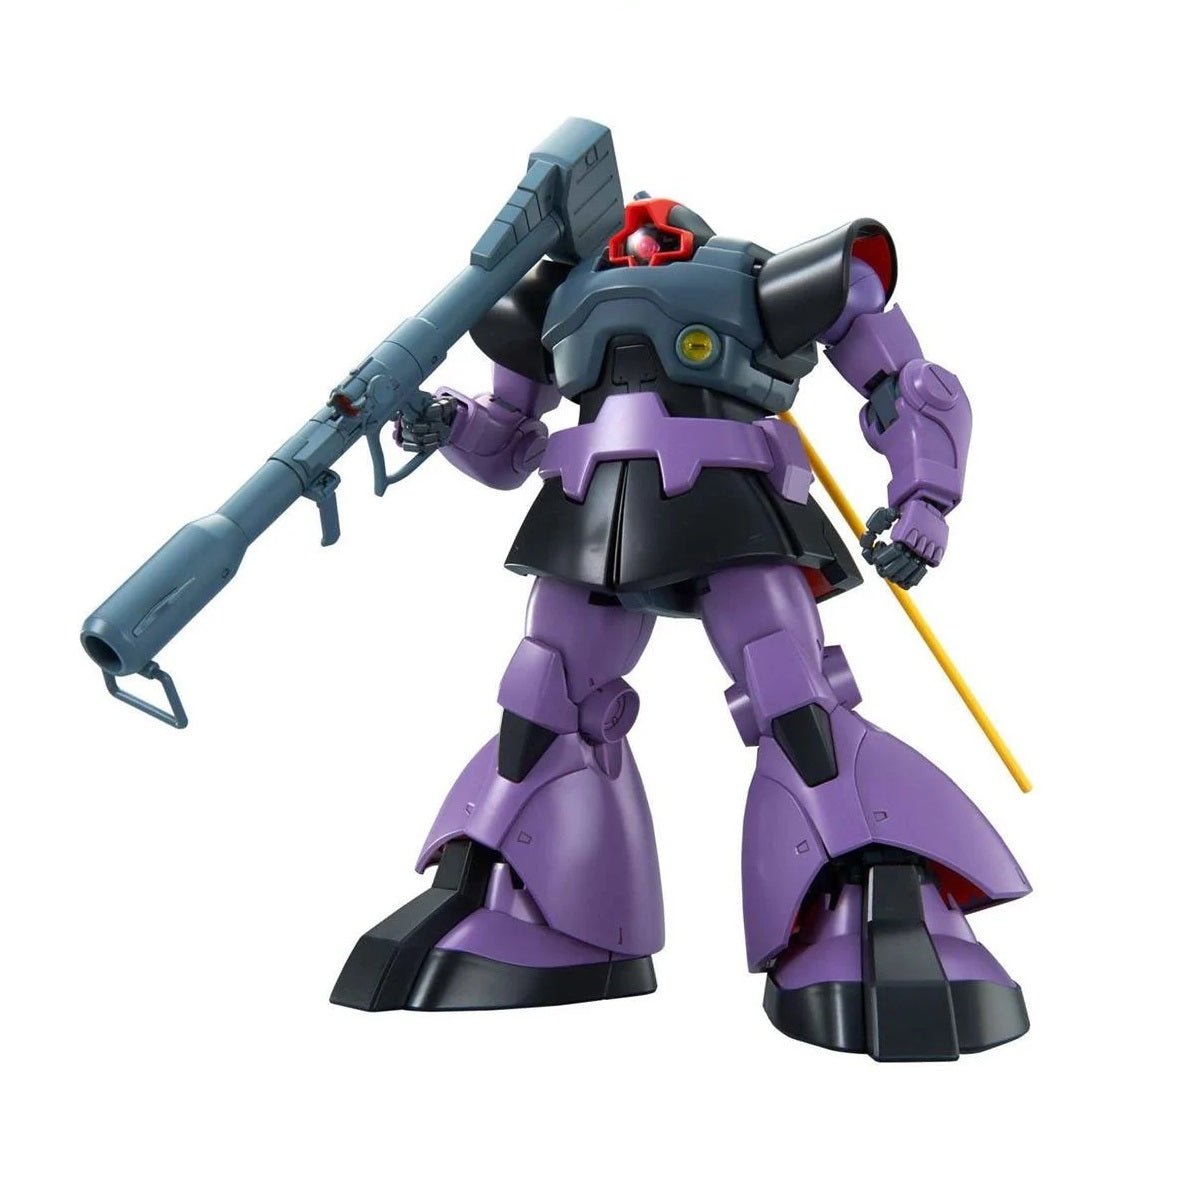 Bandai MS - 09 Dom "Mobile Gundam Suit" Master Grade Plastic Model Kit, 1/100 Scale